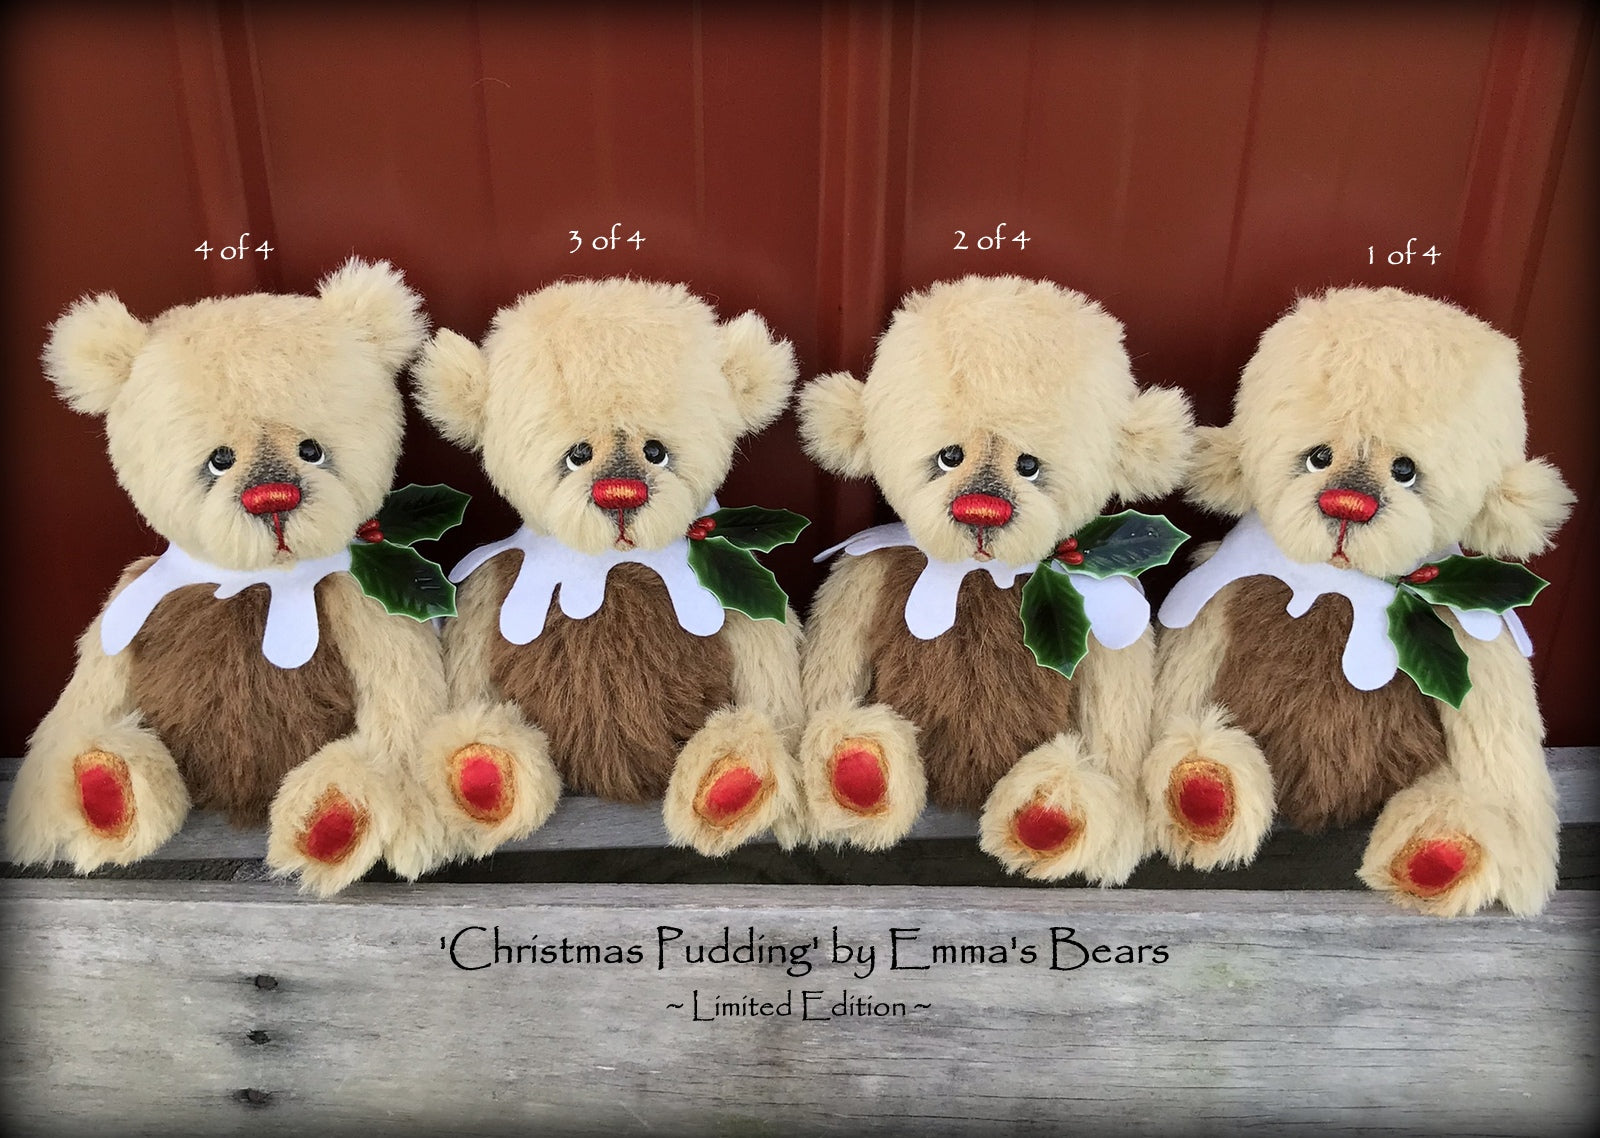 Christmas Pudding L/E 1 of 4 - Handmade ALPACA artist bear by Emma's Bears